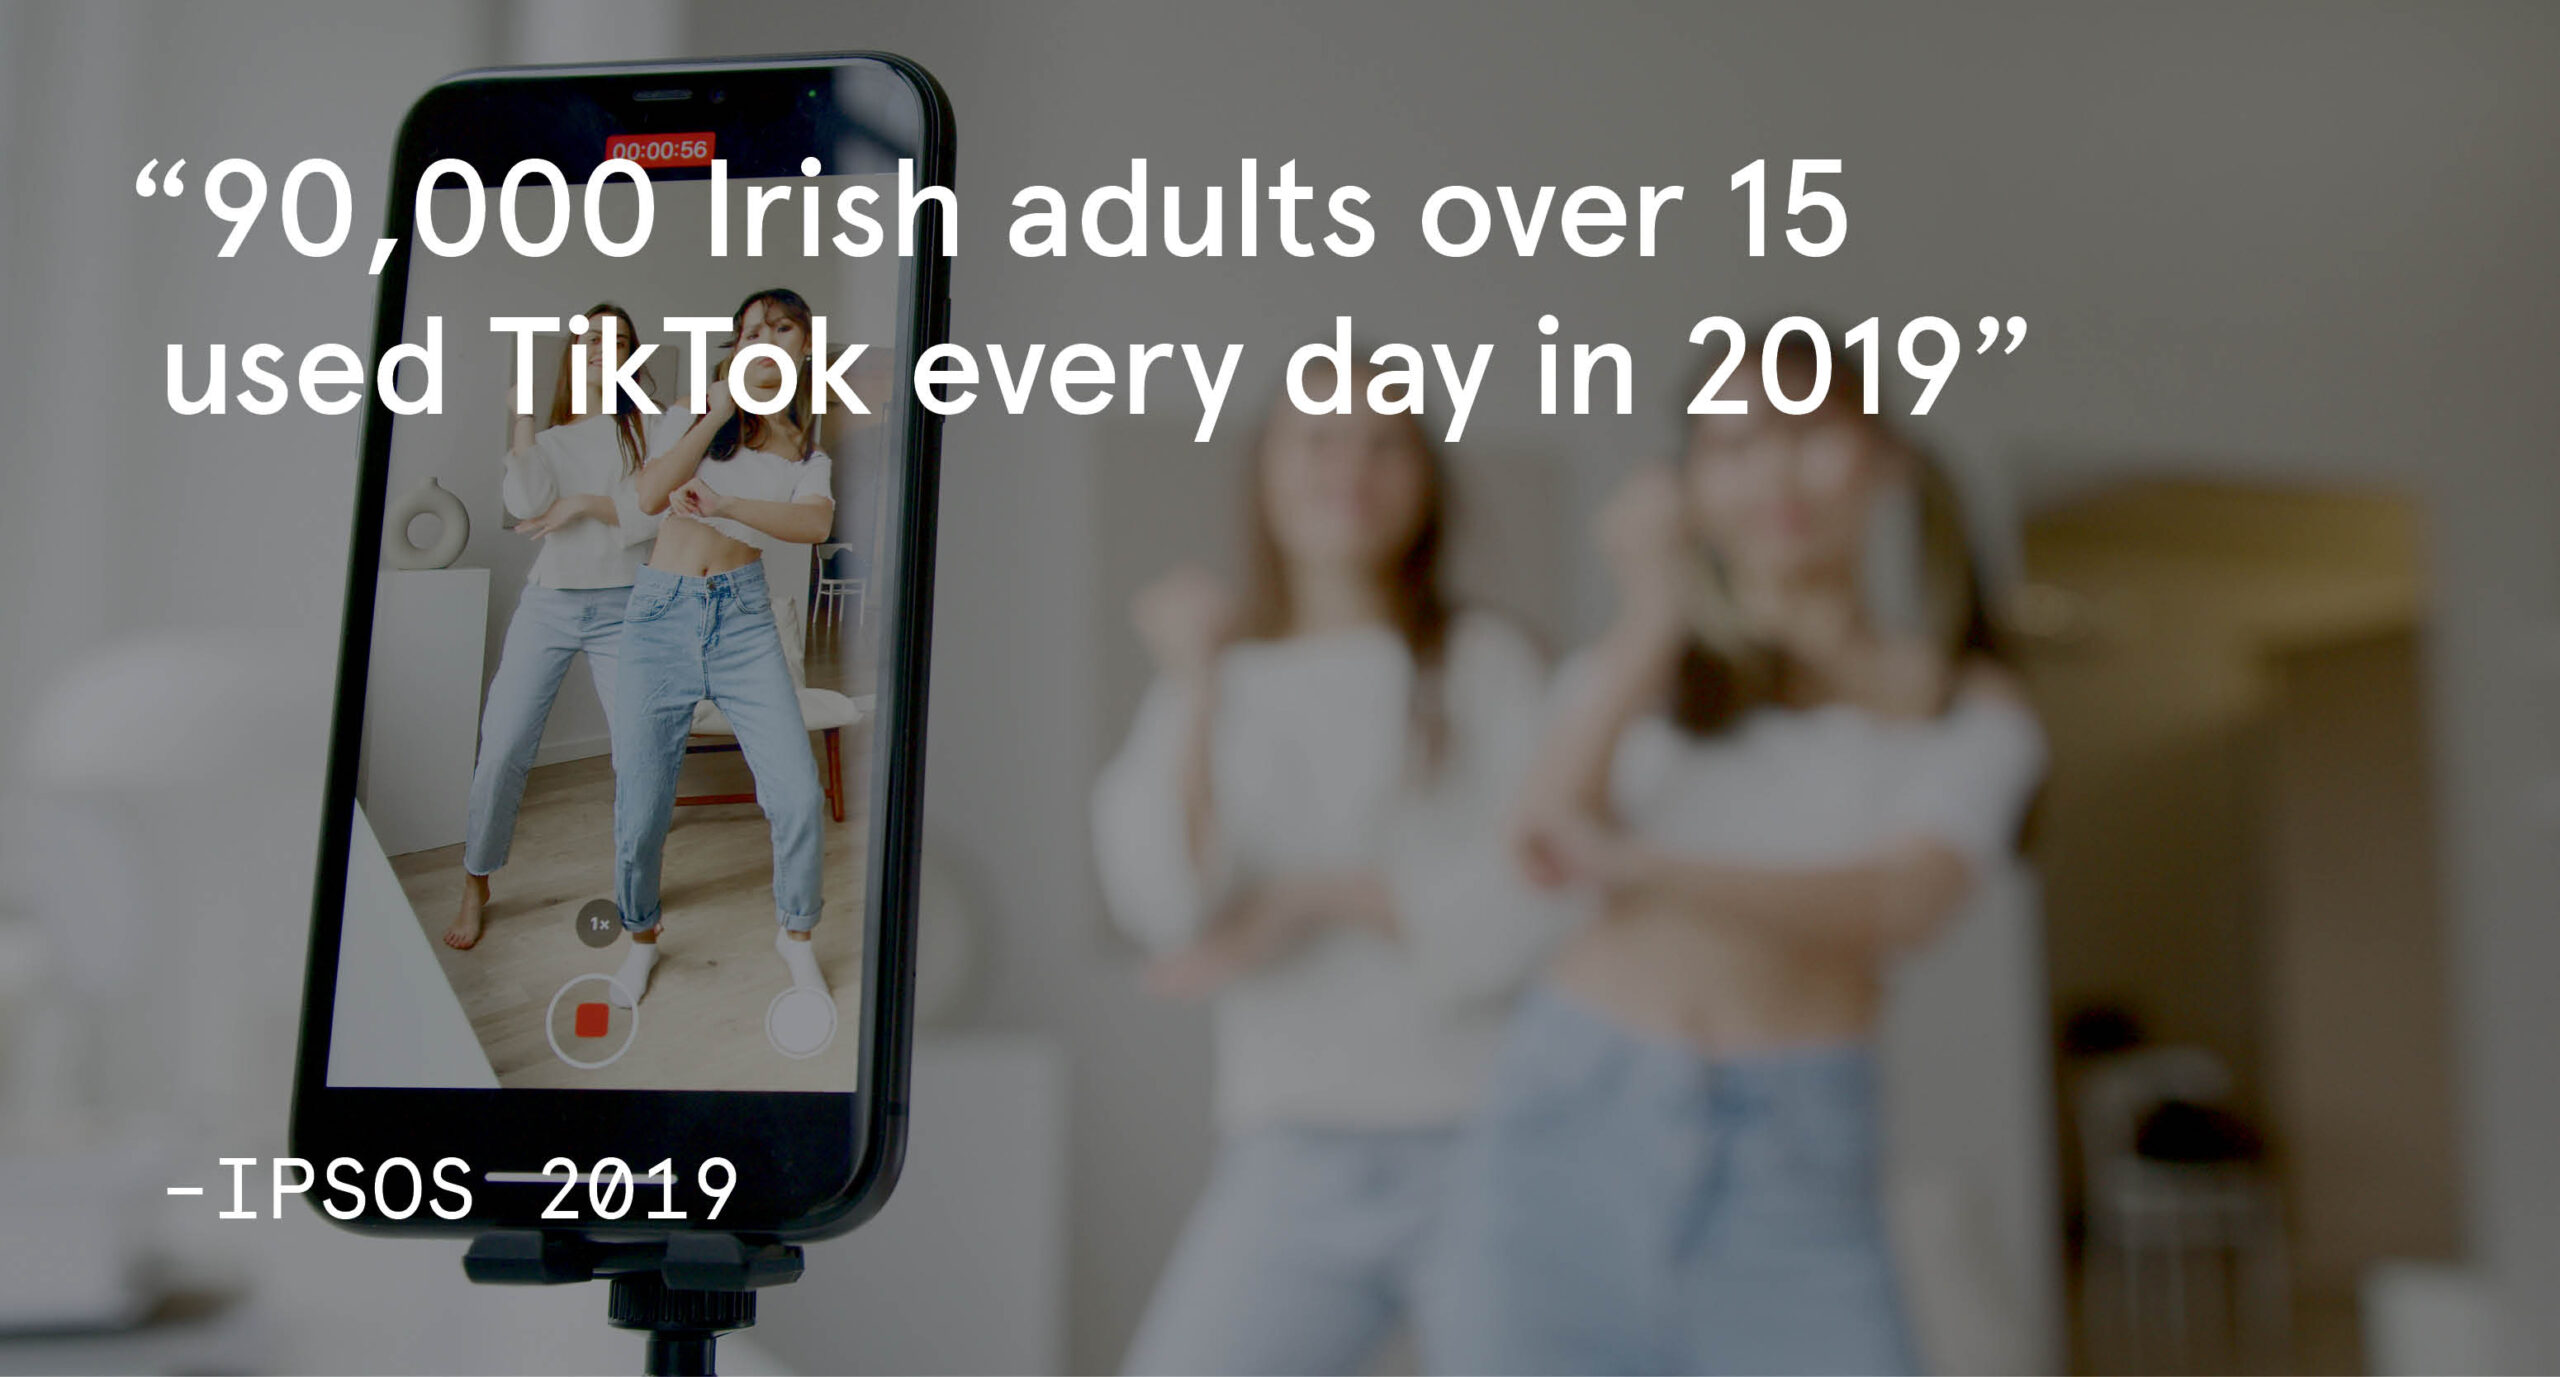 90,000 Irish adults over 15 used TikTok every day in 2019 (IPSOS, 2019).